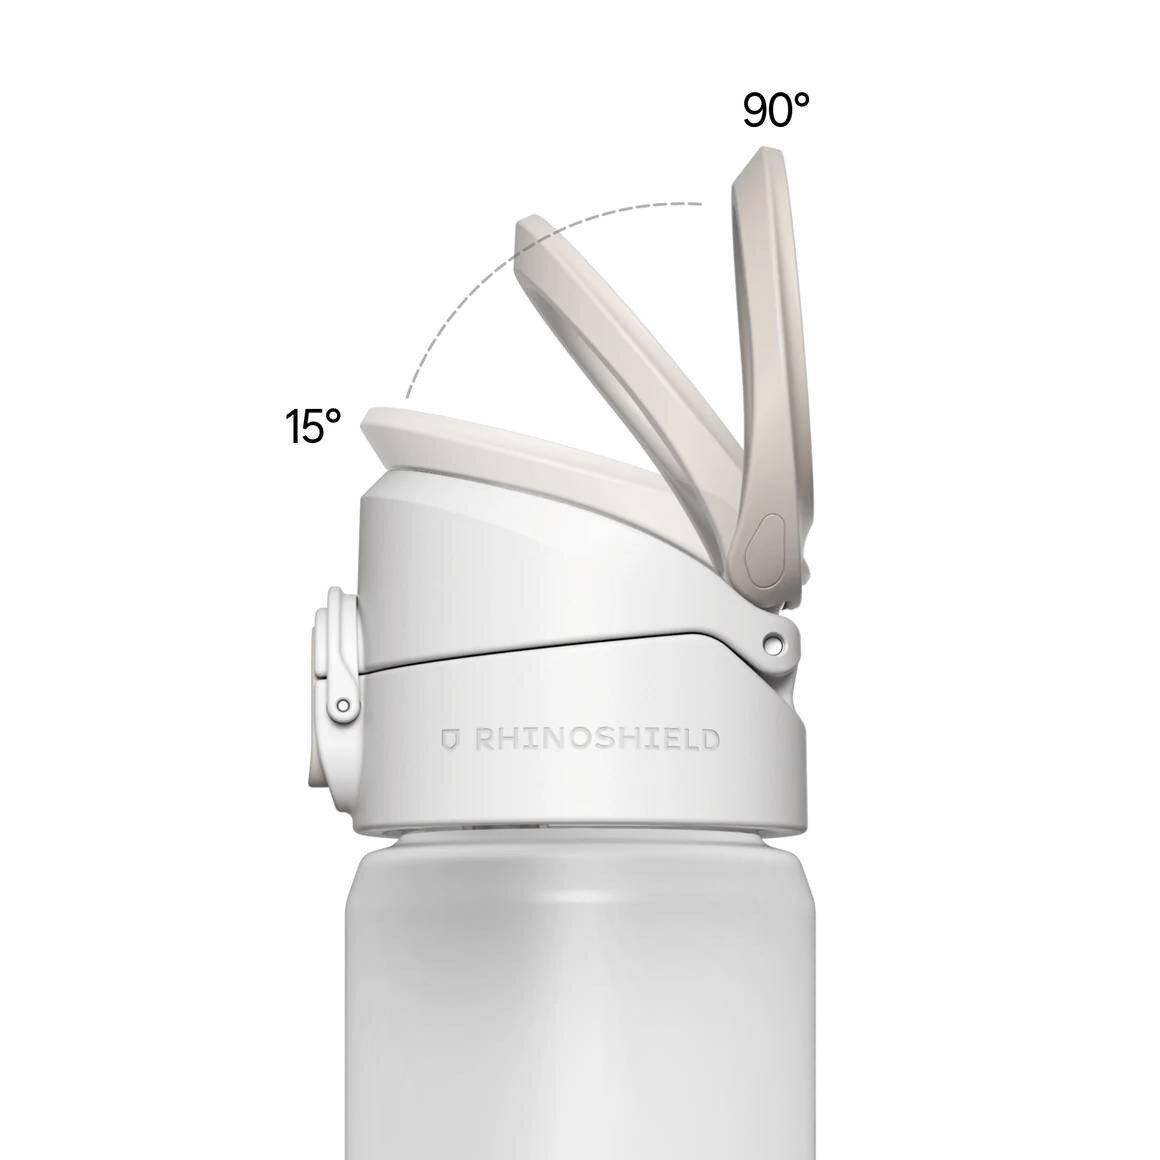 AquaStand - MagSafe compatible water bottle I RHINOSHIELD